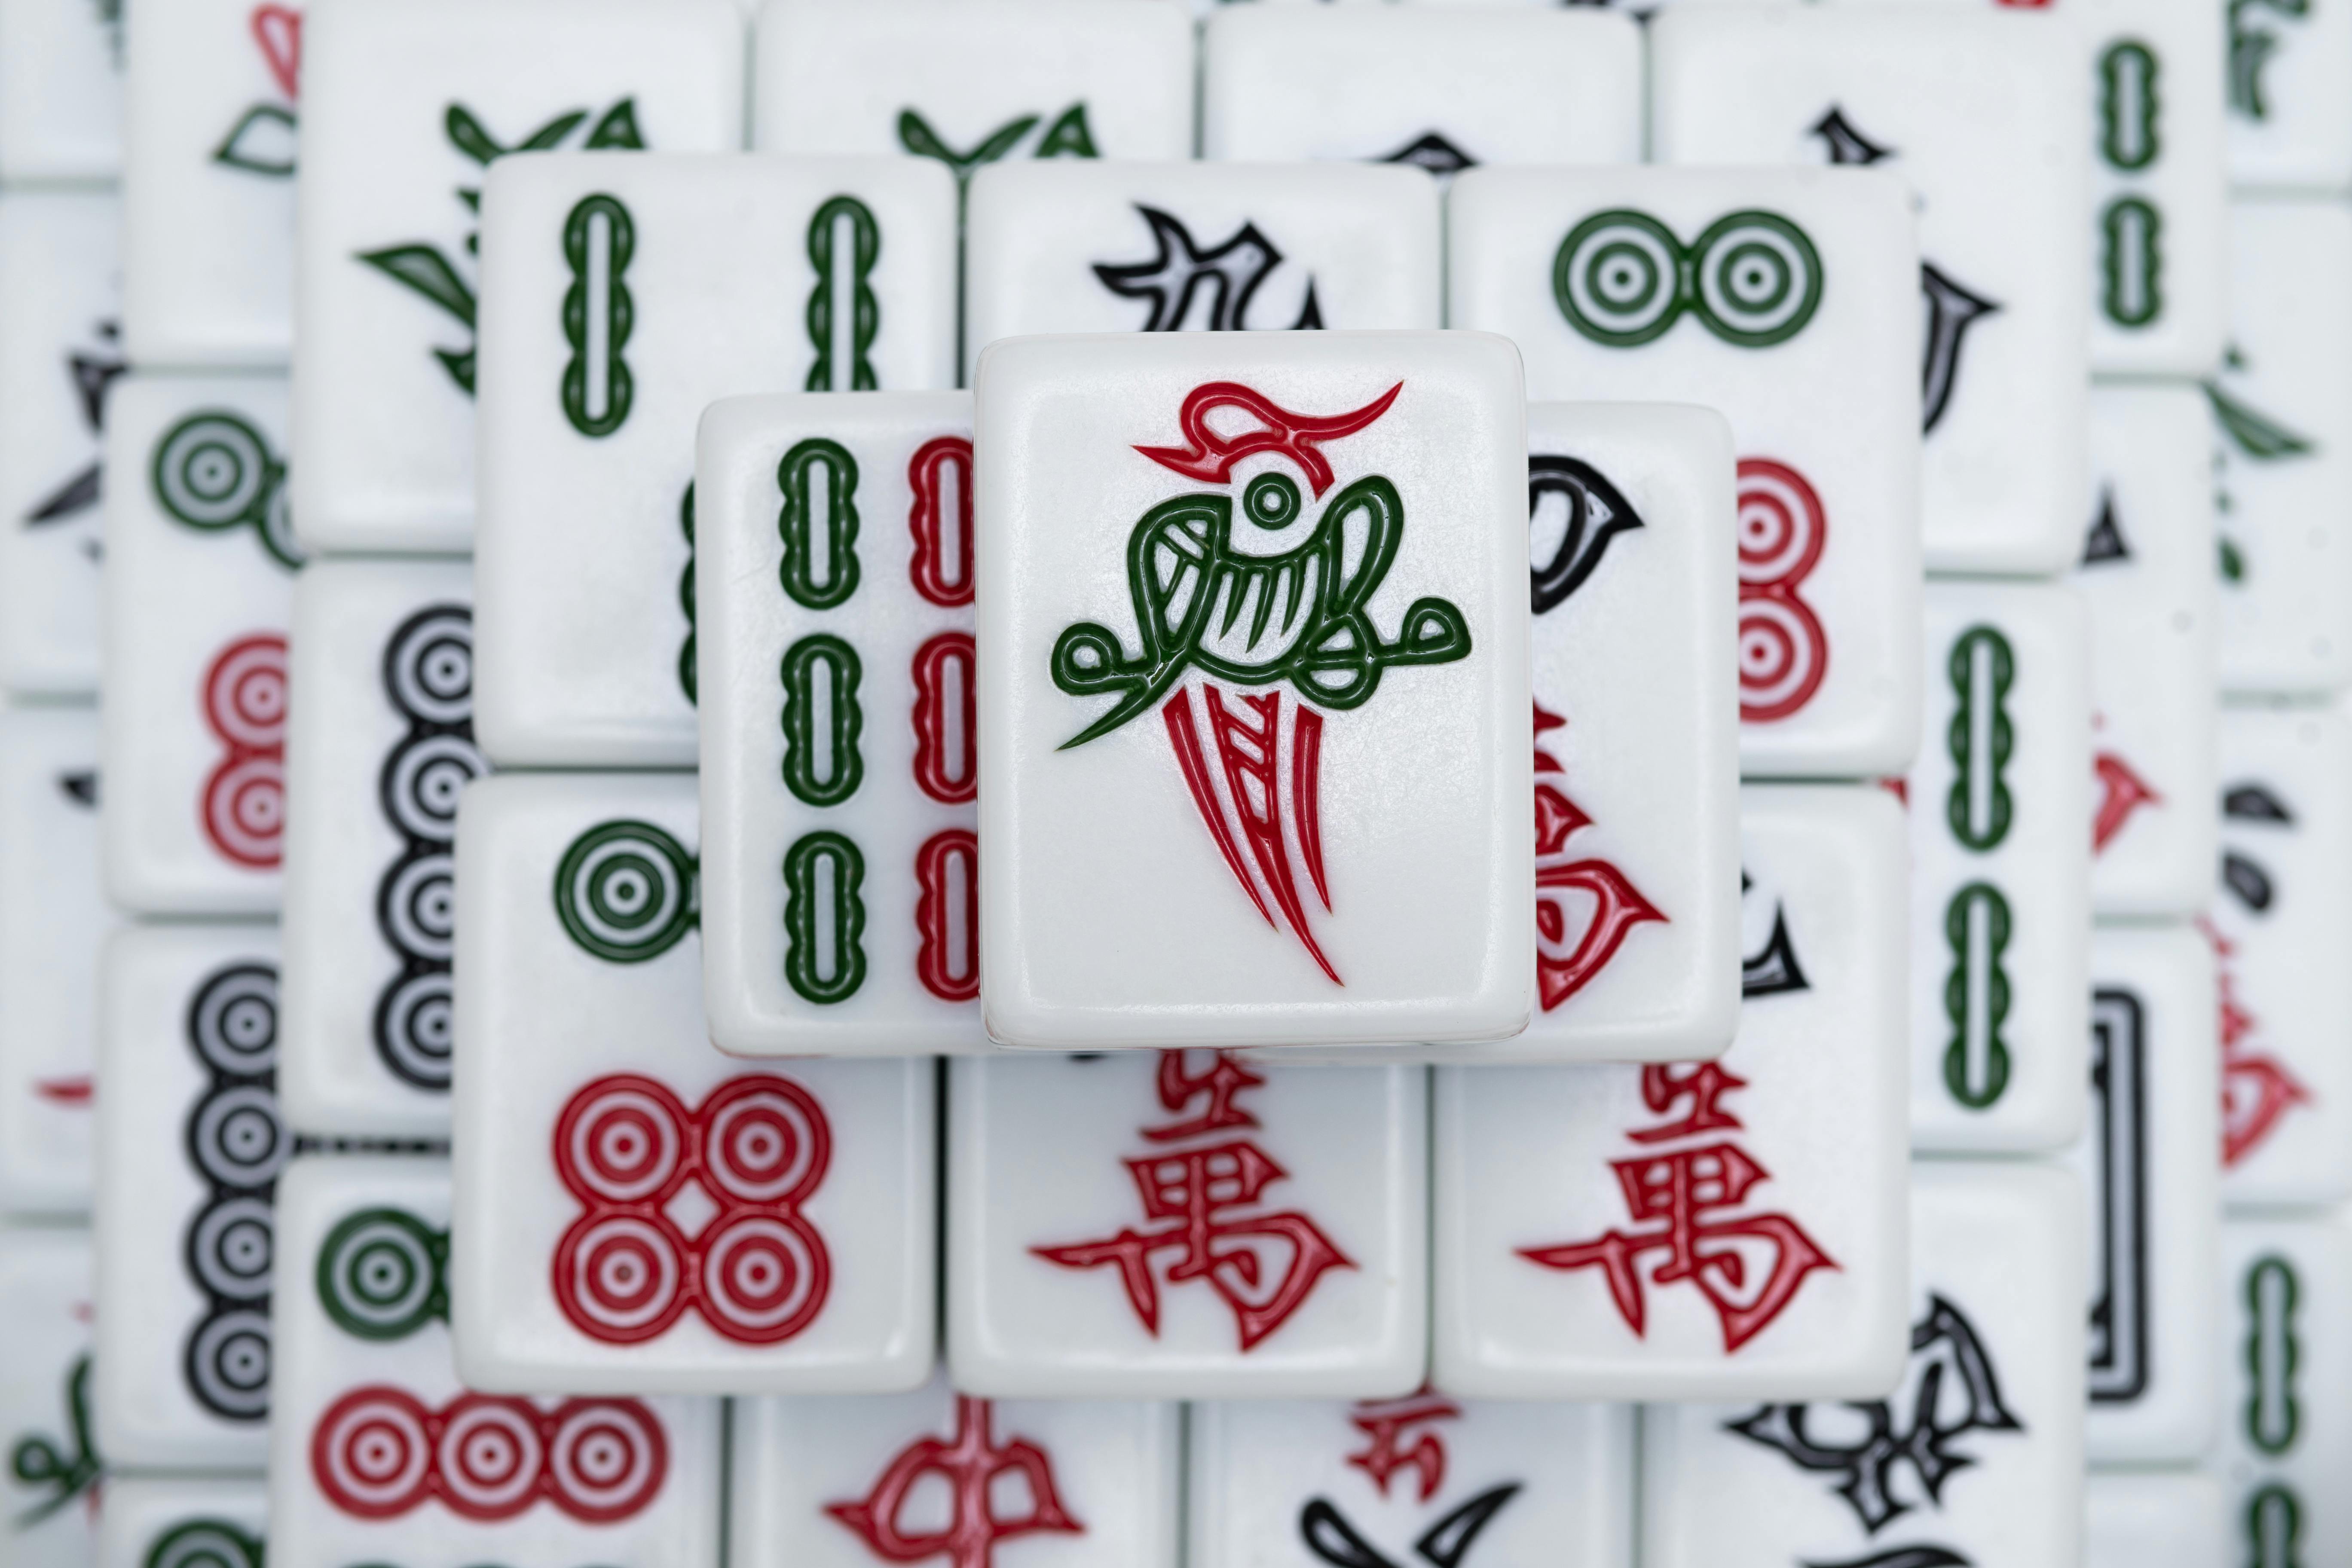 stacked mahjong tiles in focus